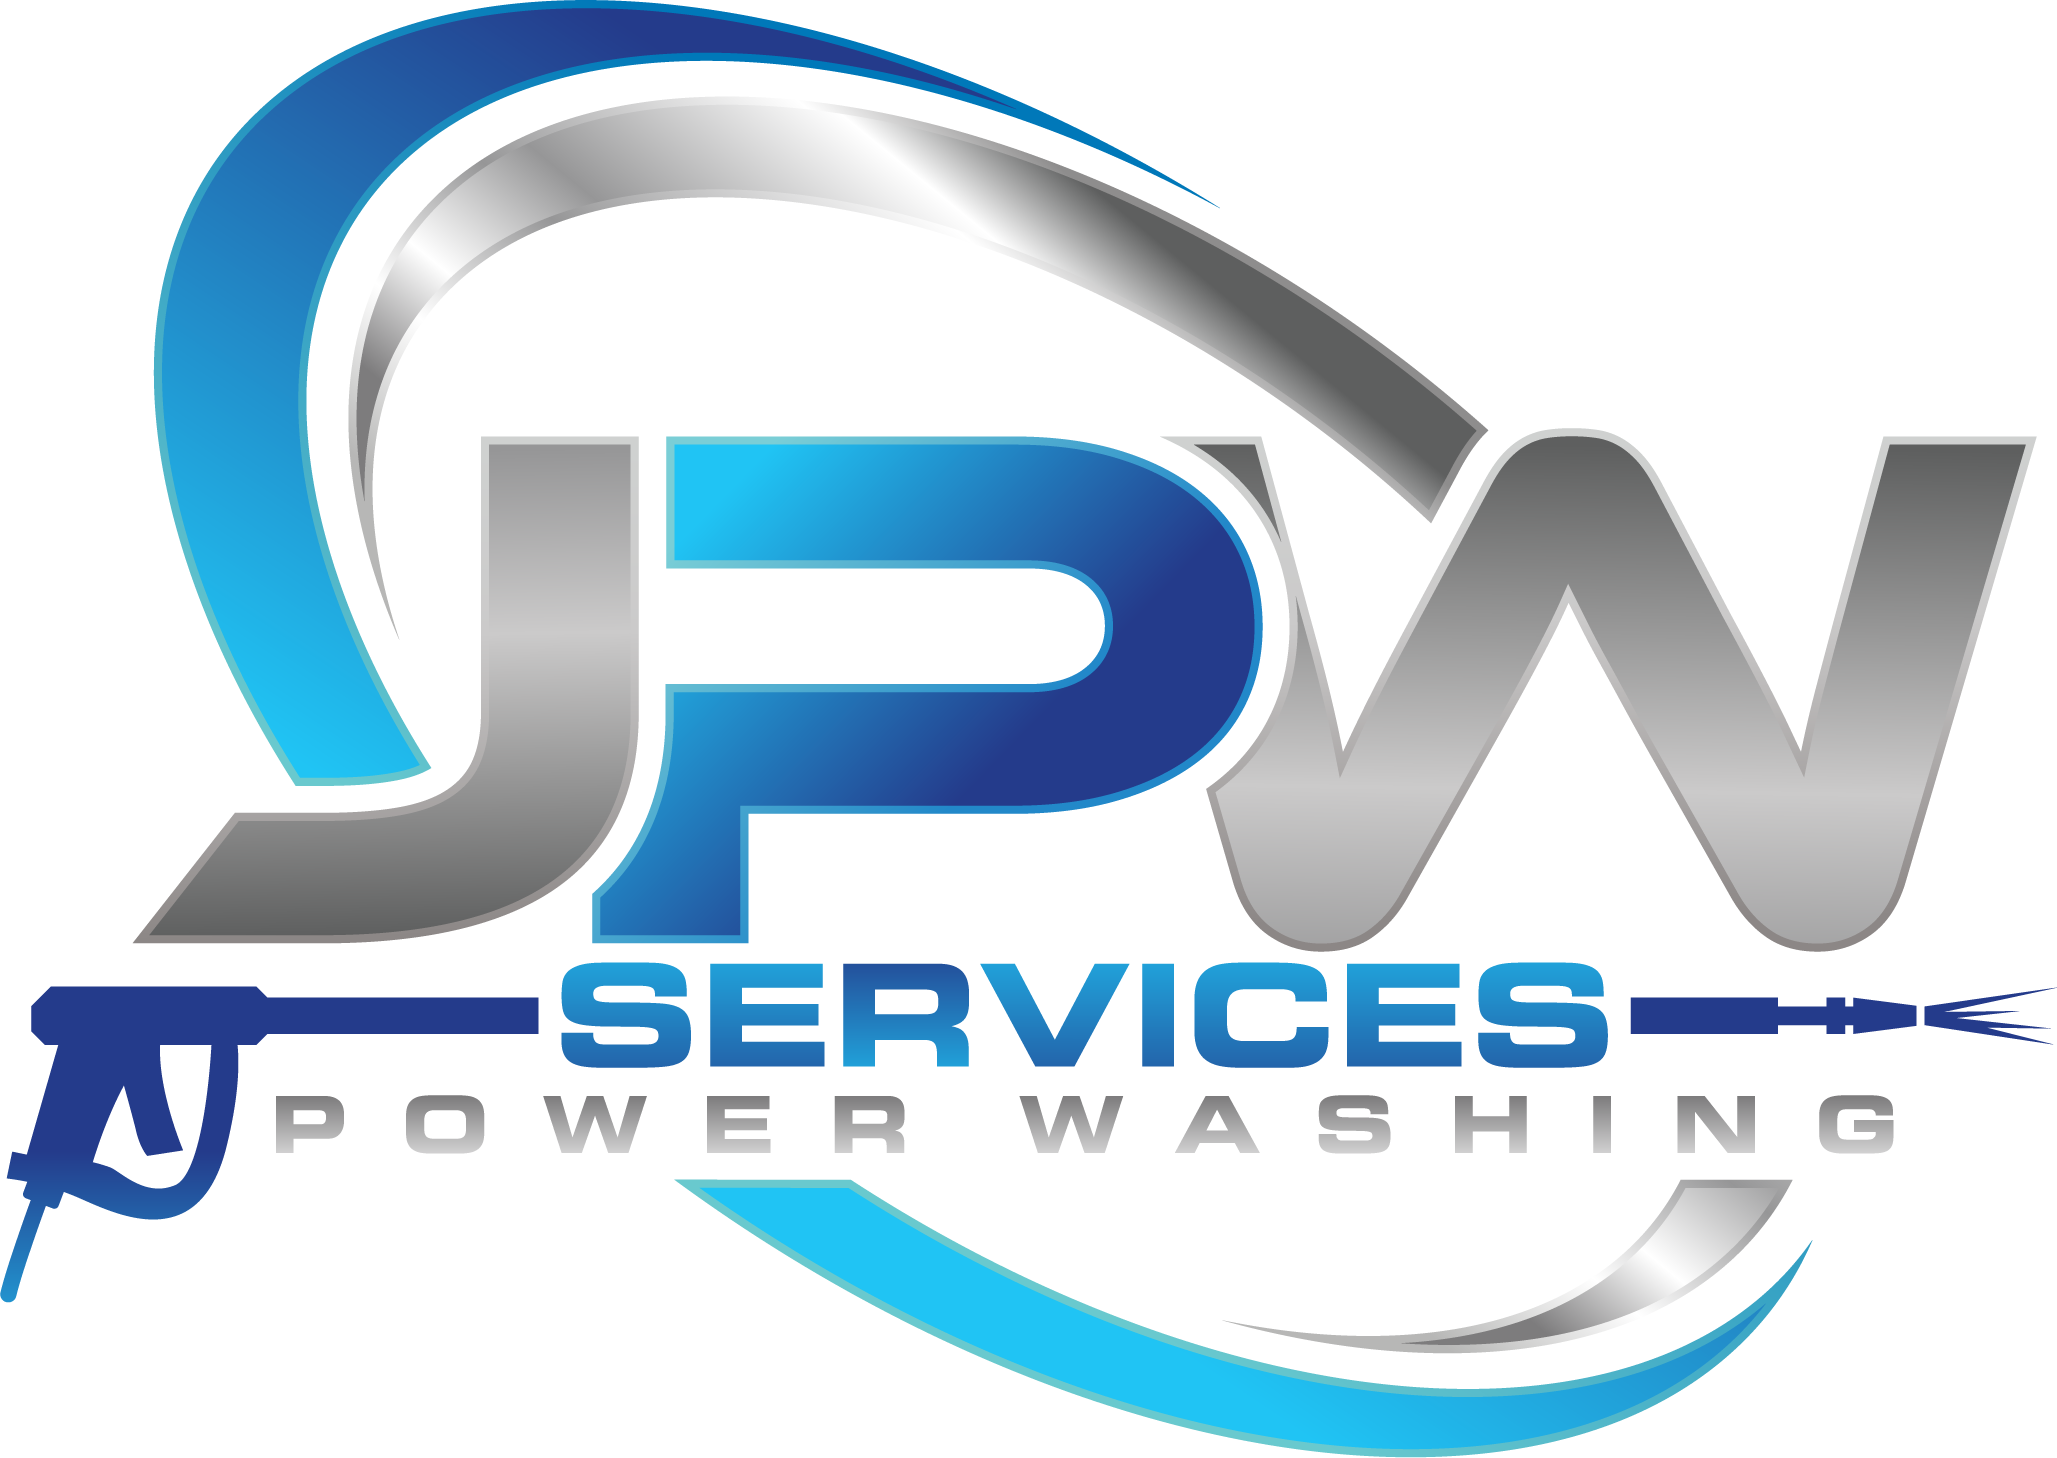 JPW Services Power Washing, LLC Logo